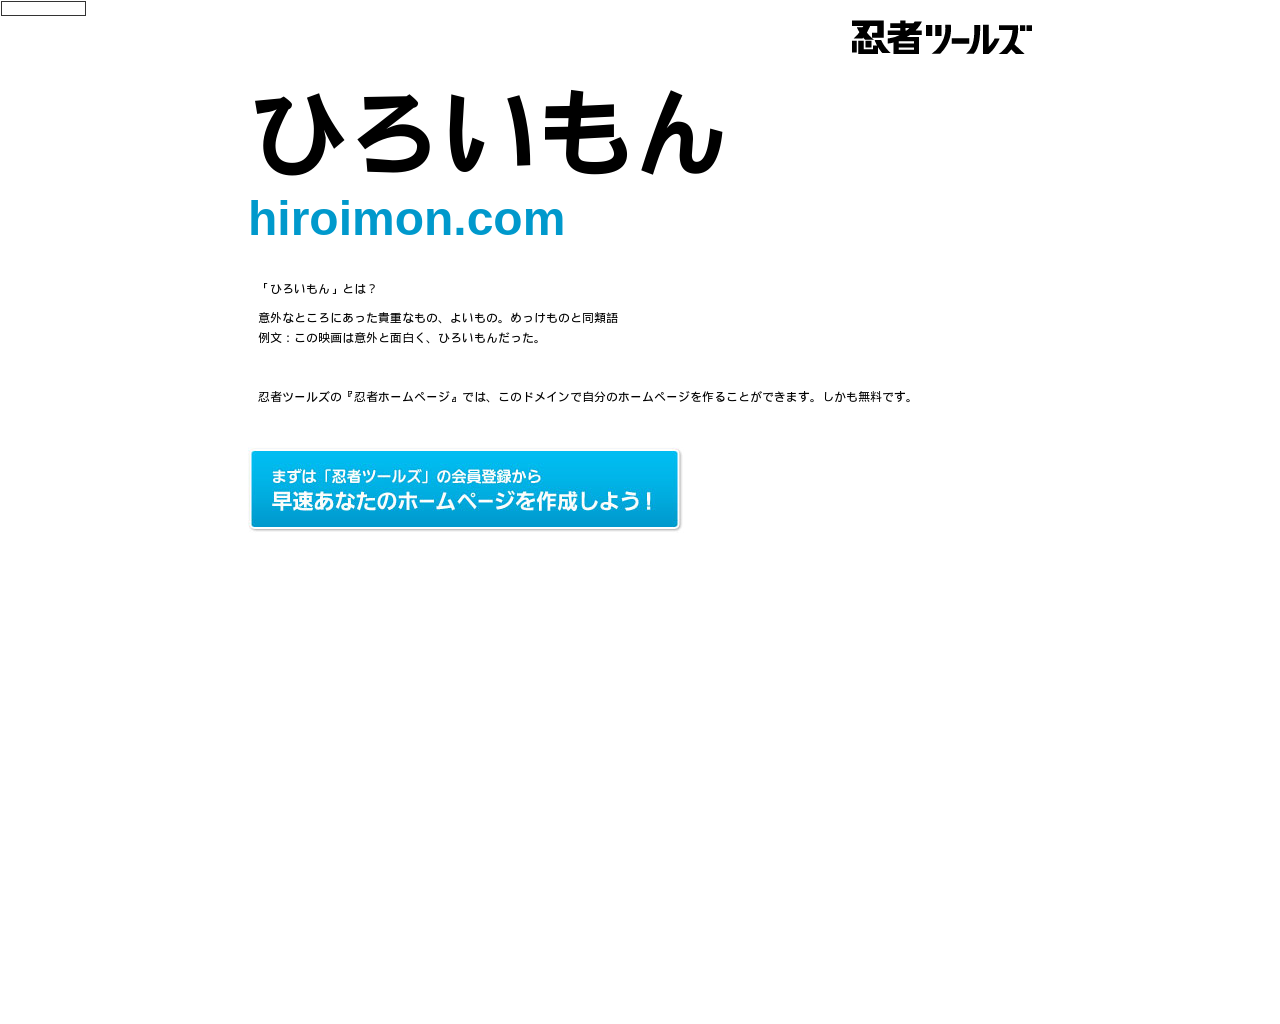 hiroimon.com